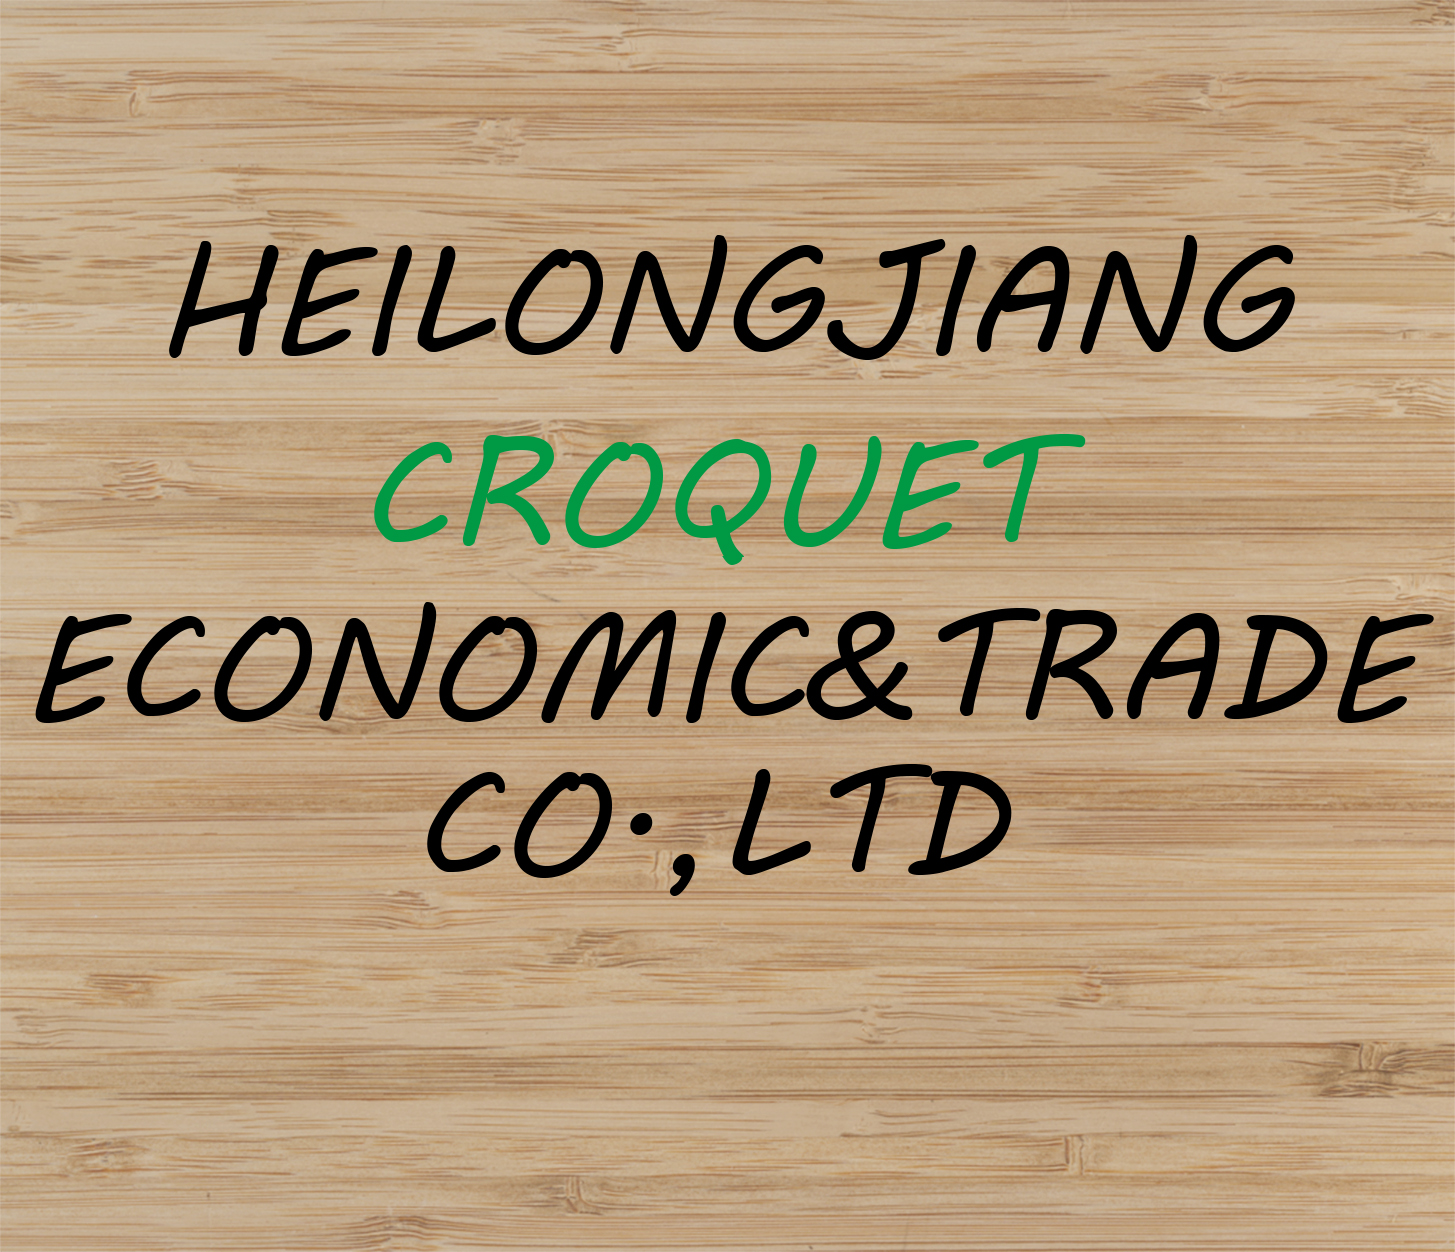 HEILONGJIANG CROQUET ECONOMIC AND TRADE CO.,LTD.